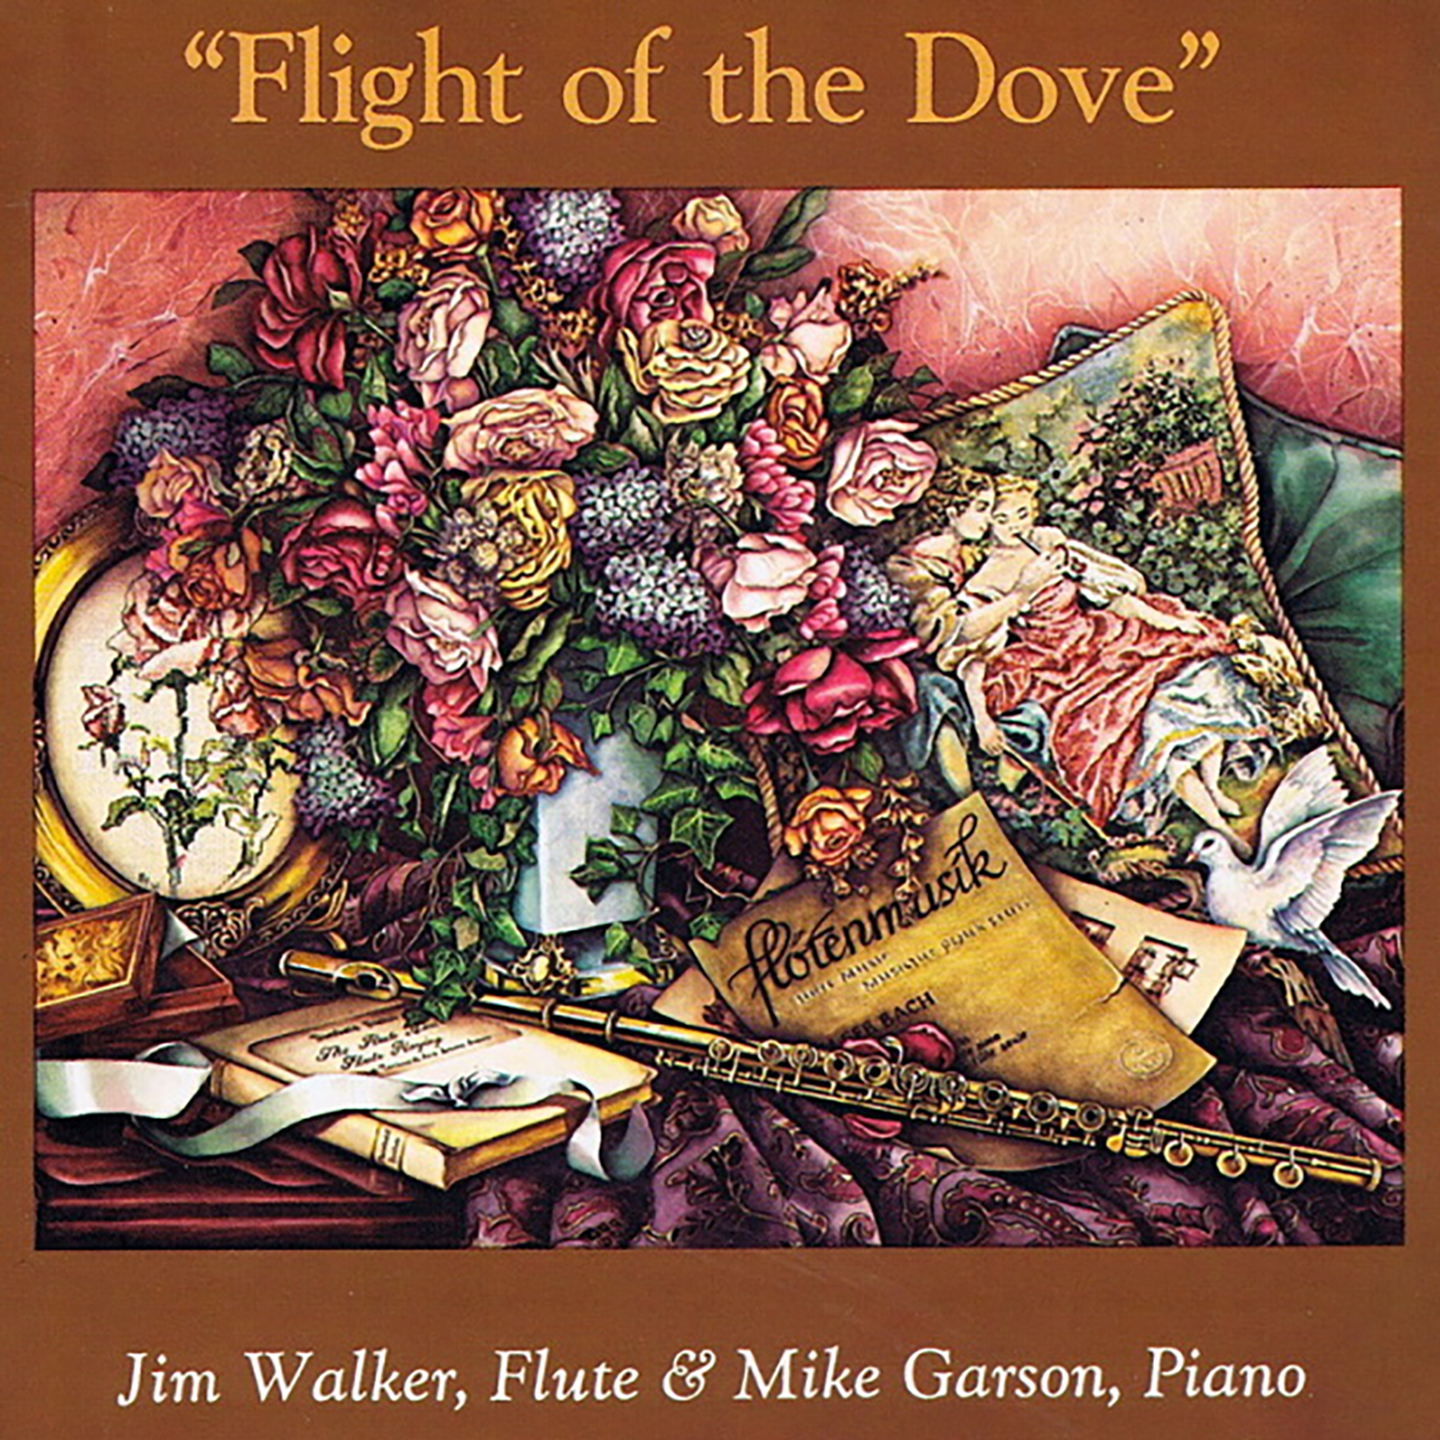 Jim Walker & Mike Garson - Flight of the Dove album cover